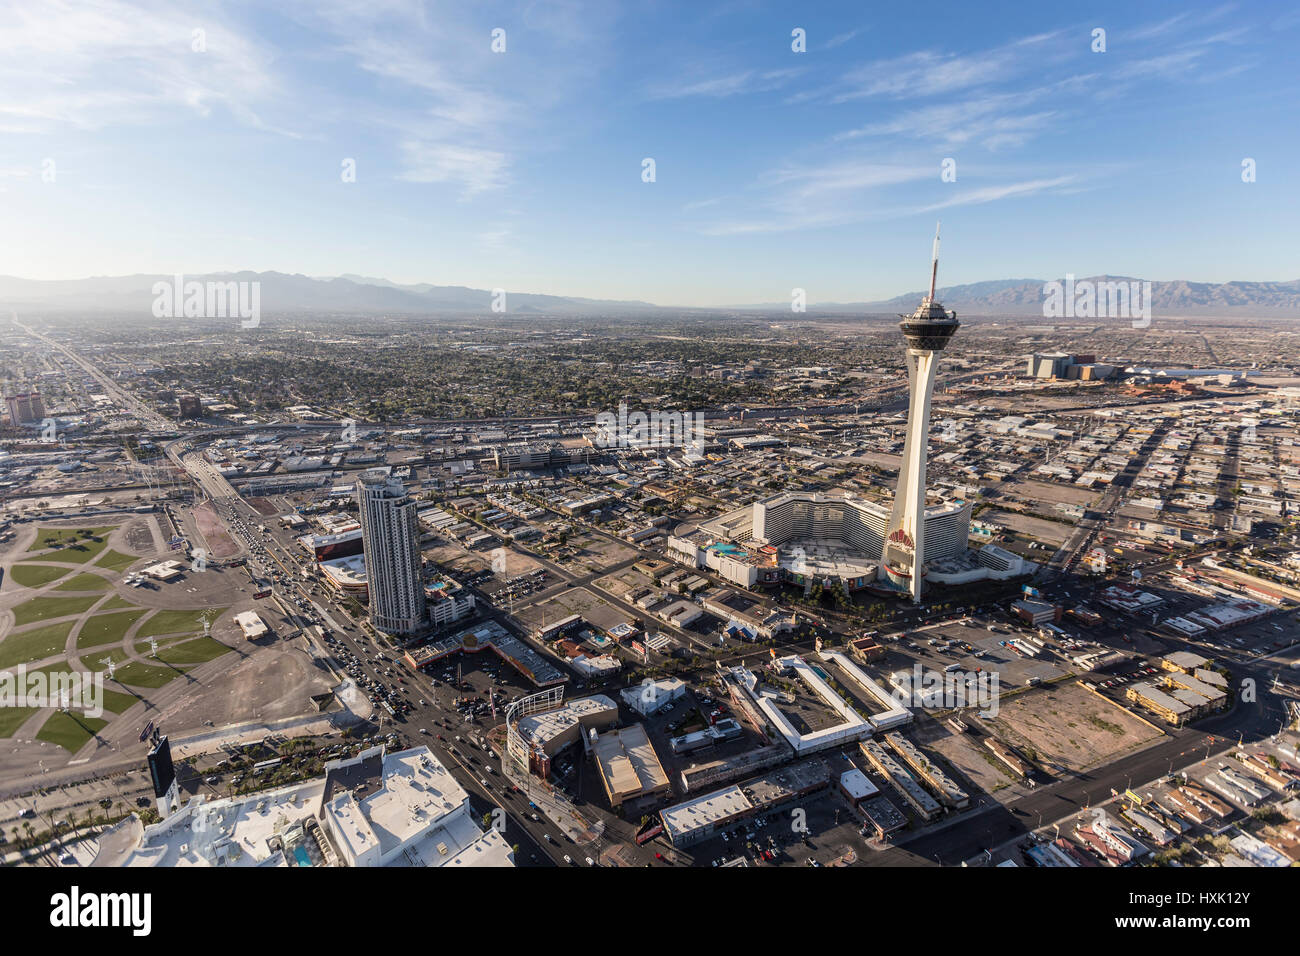 Las Vegas, Nevada, USA - 13. März 2017: Luftaufnahme des Casino-Resorts am Las Vegas Strip in Southern Nevada. Stockfoto